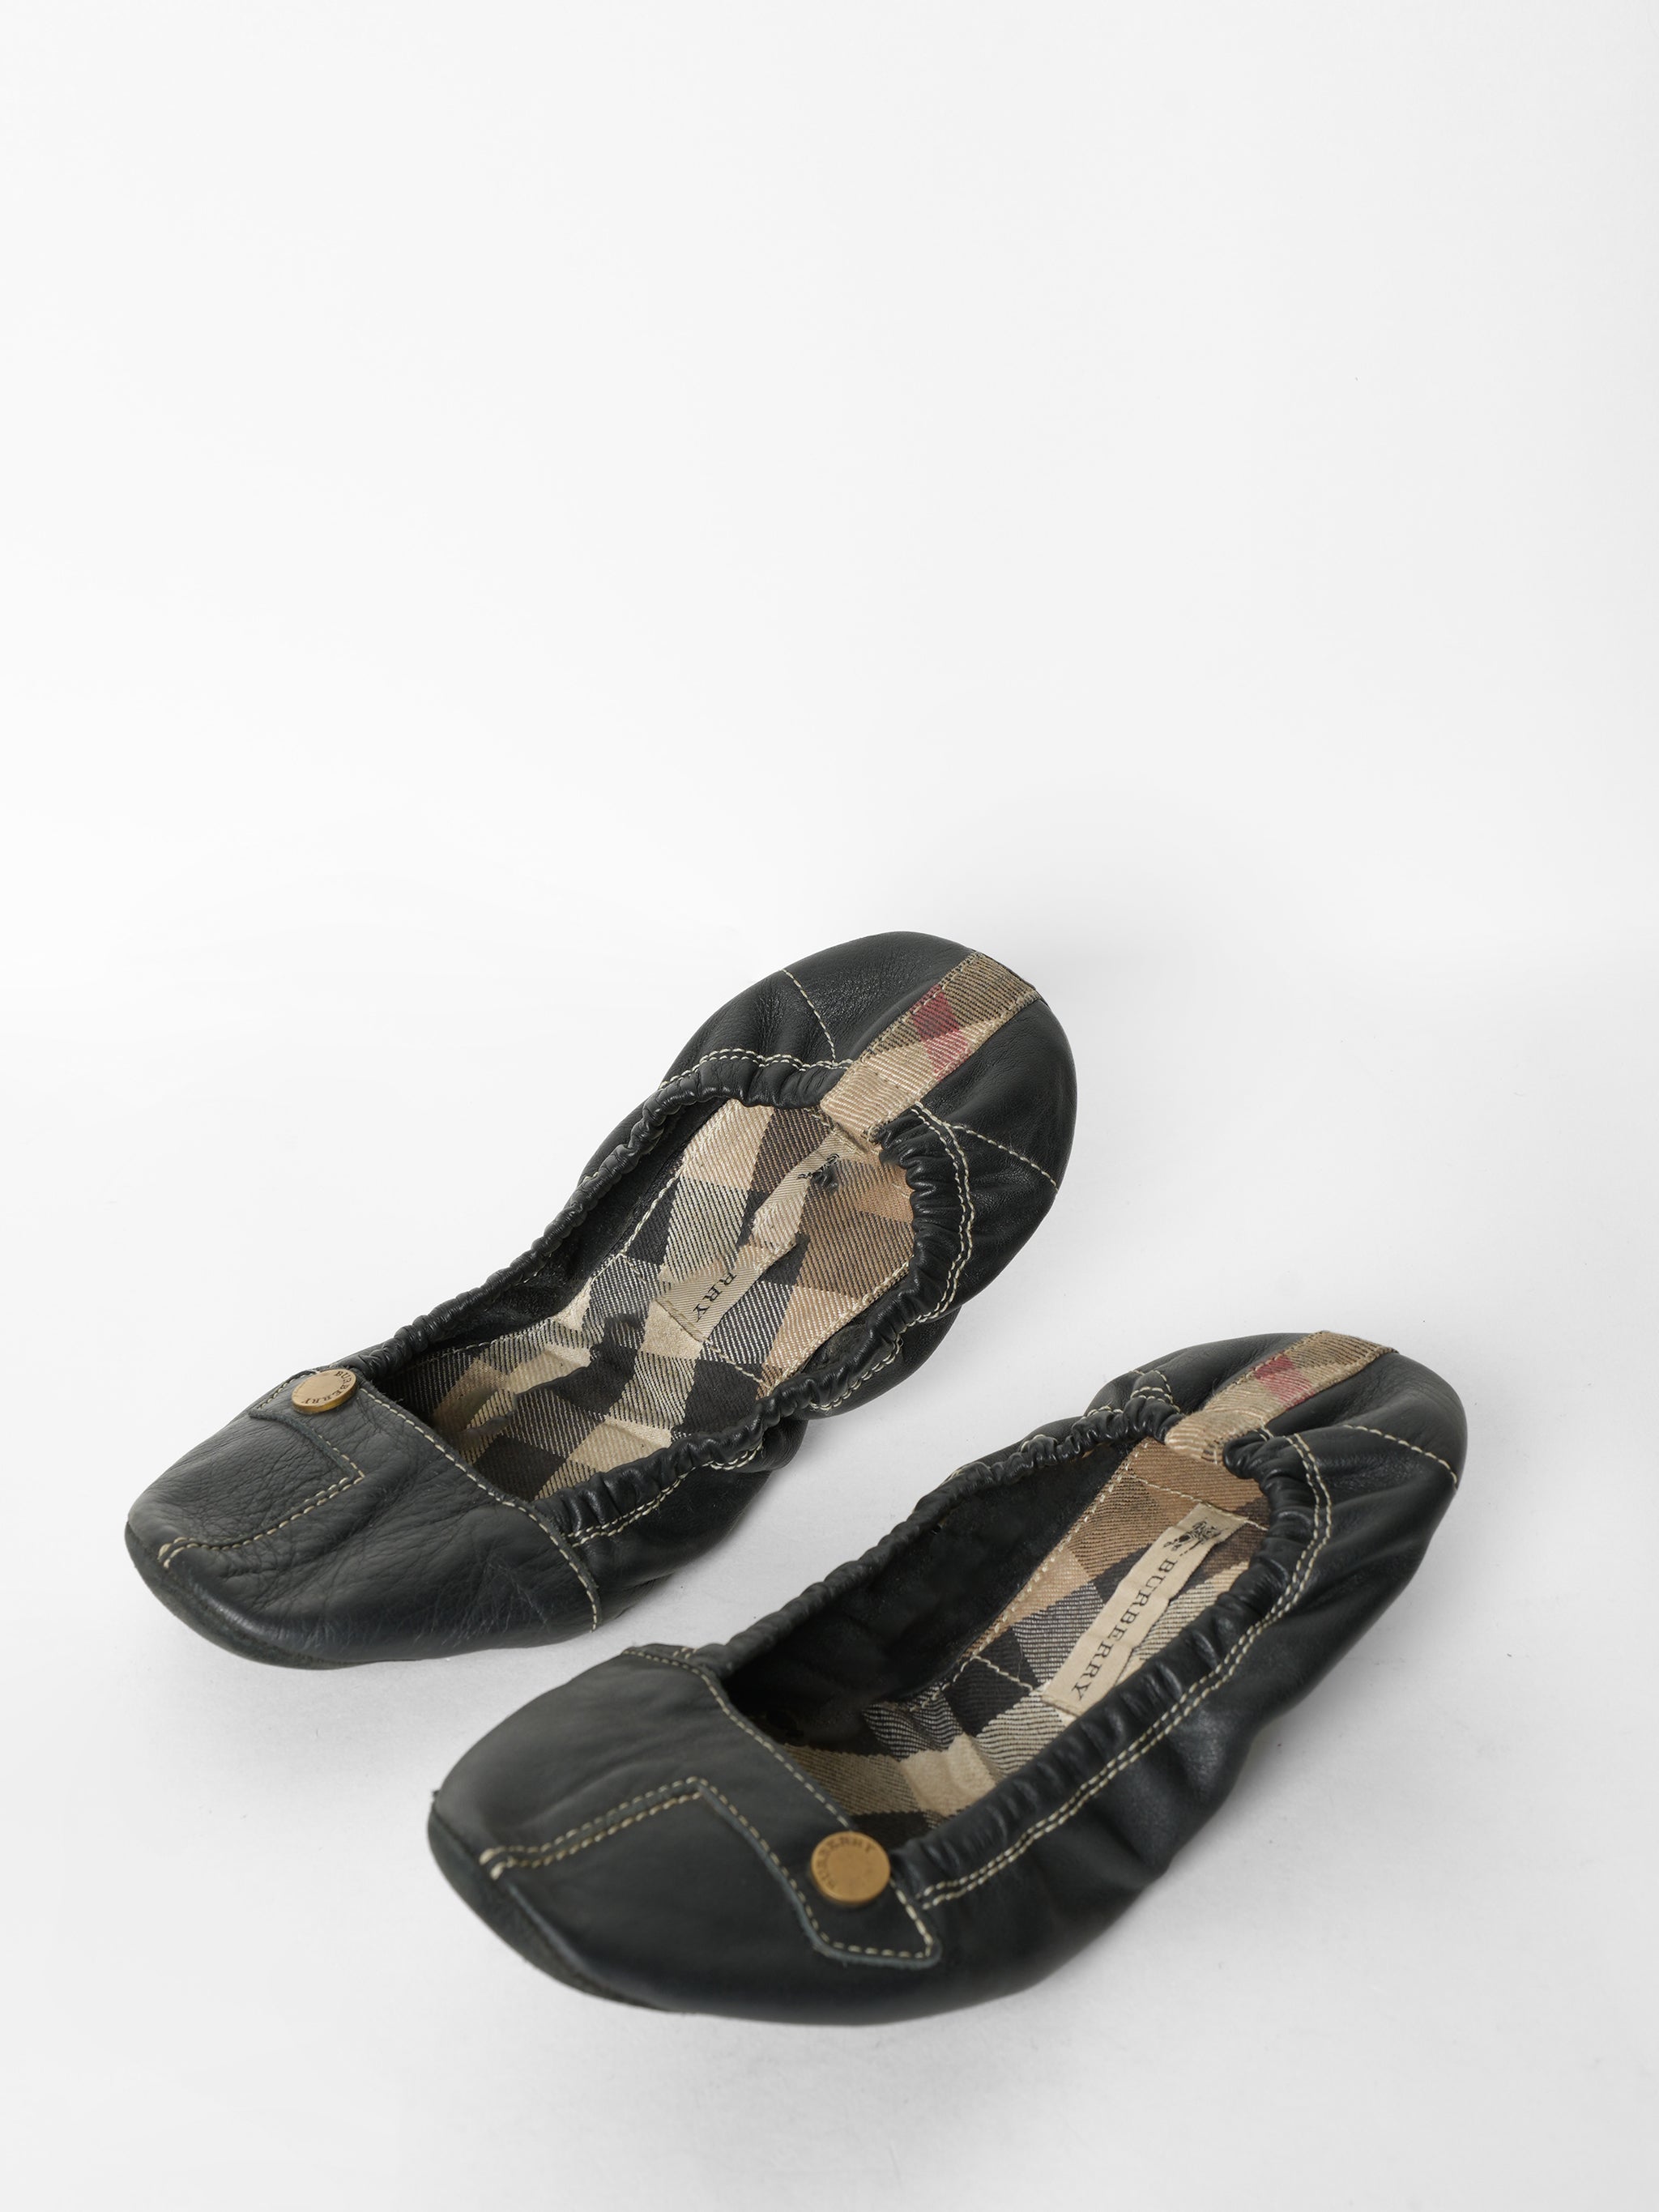 Burberry Ballet Flat Foldable Home Shoes / Flight Shoes